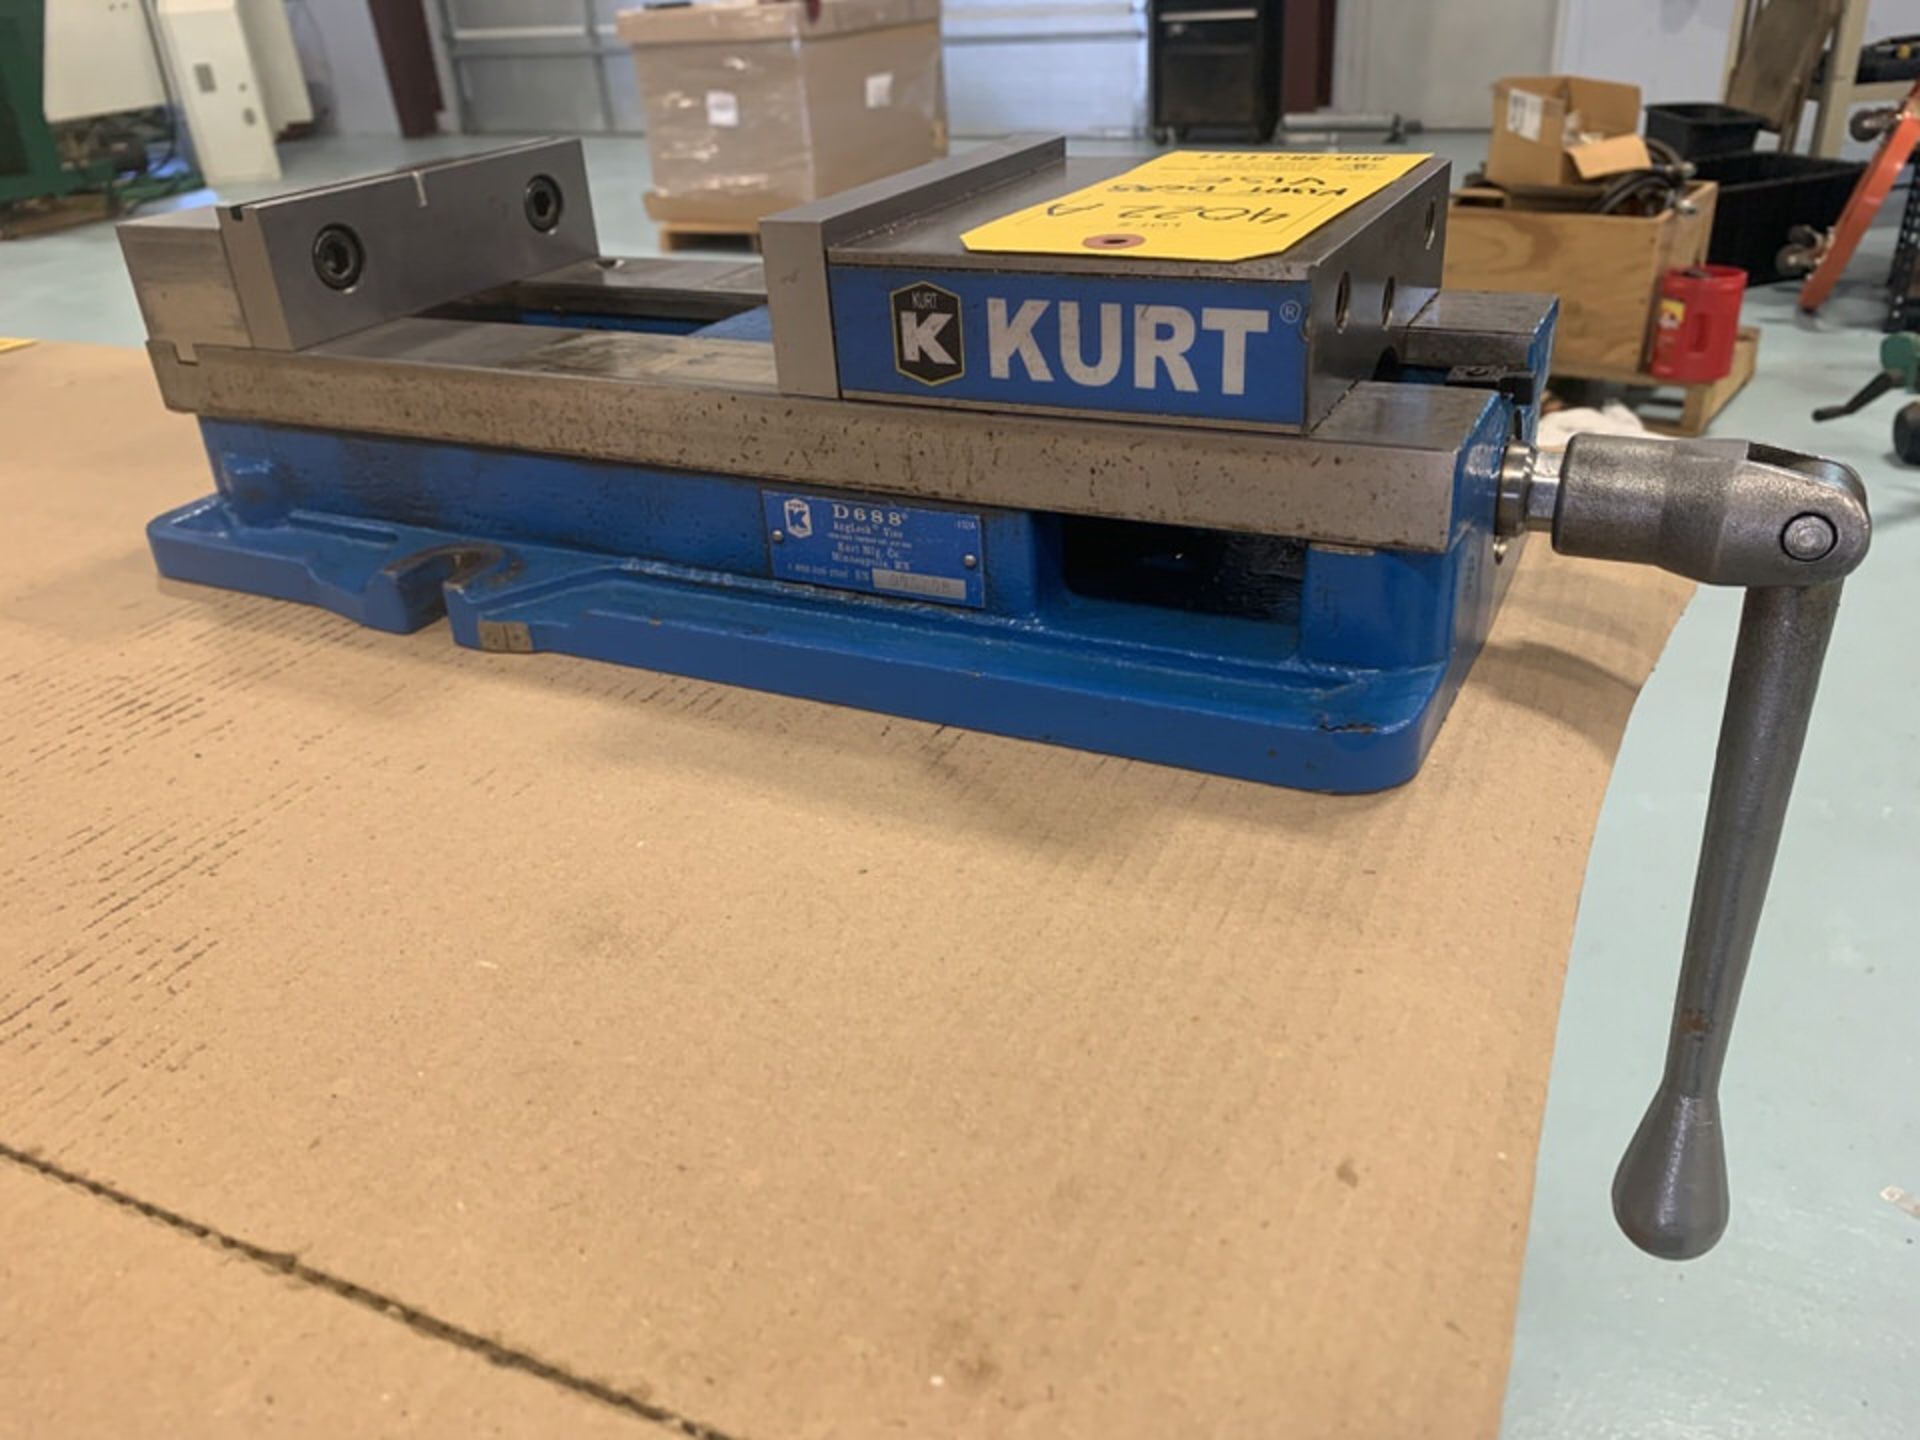 Kurt Model D688 Machine Vise - Image 3 of 3